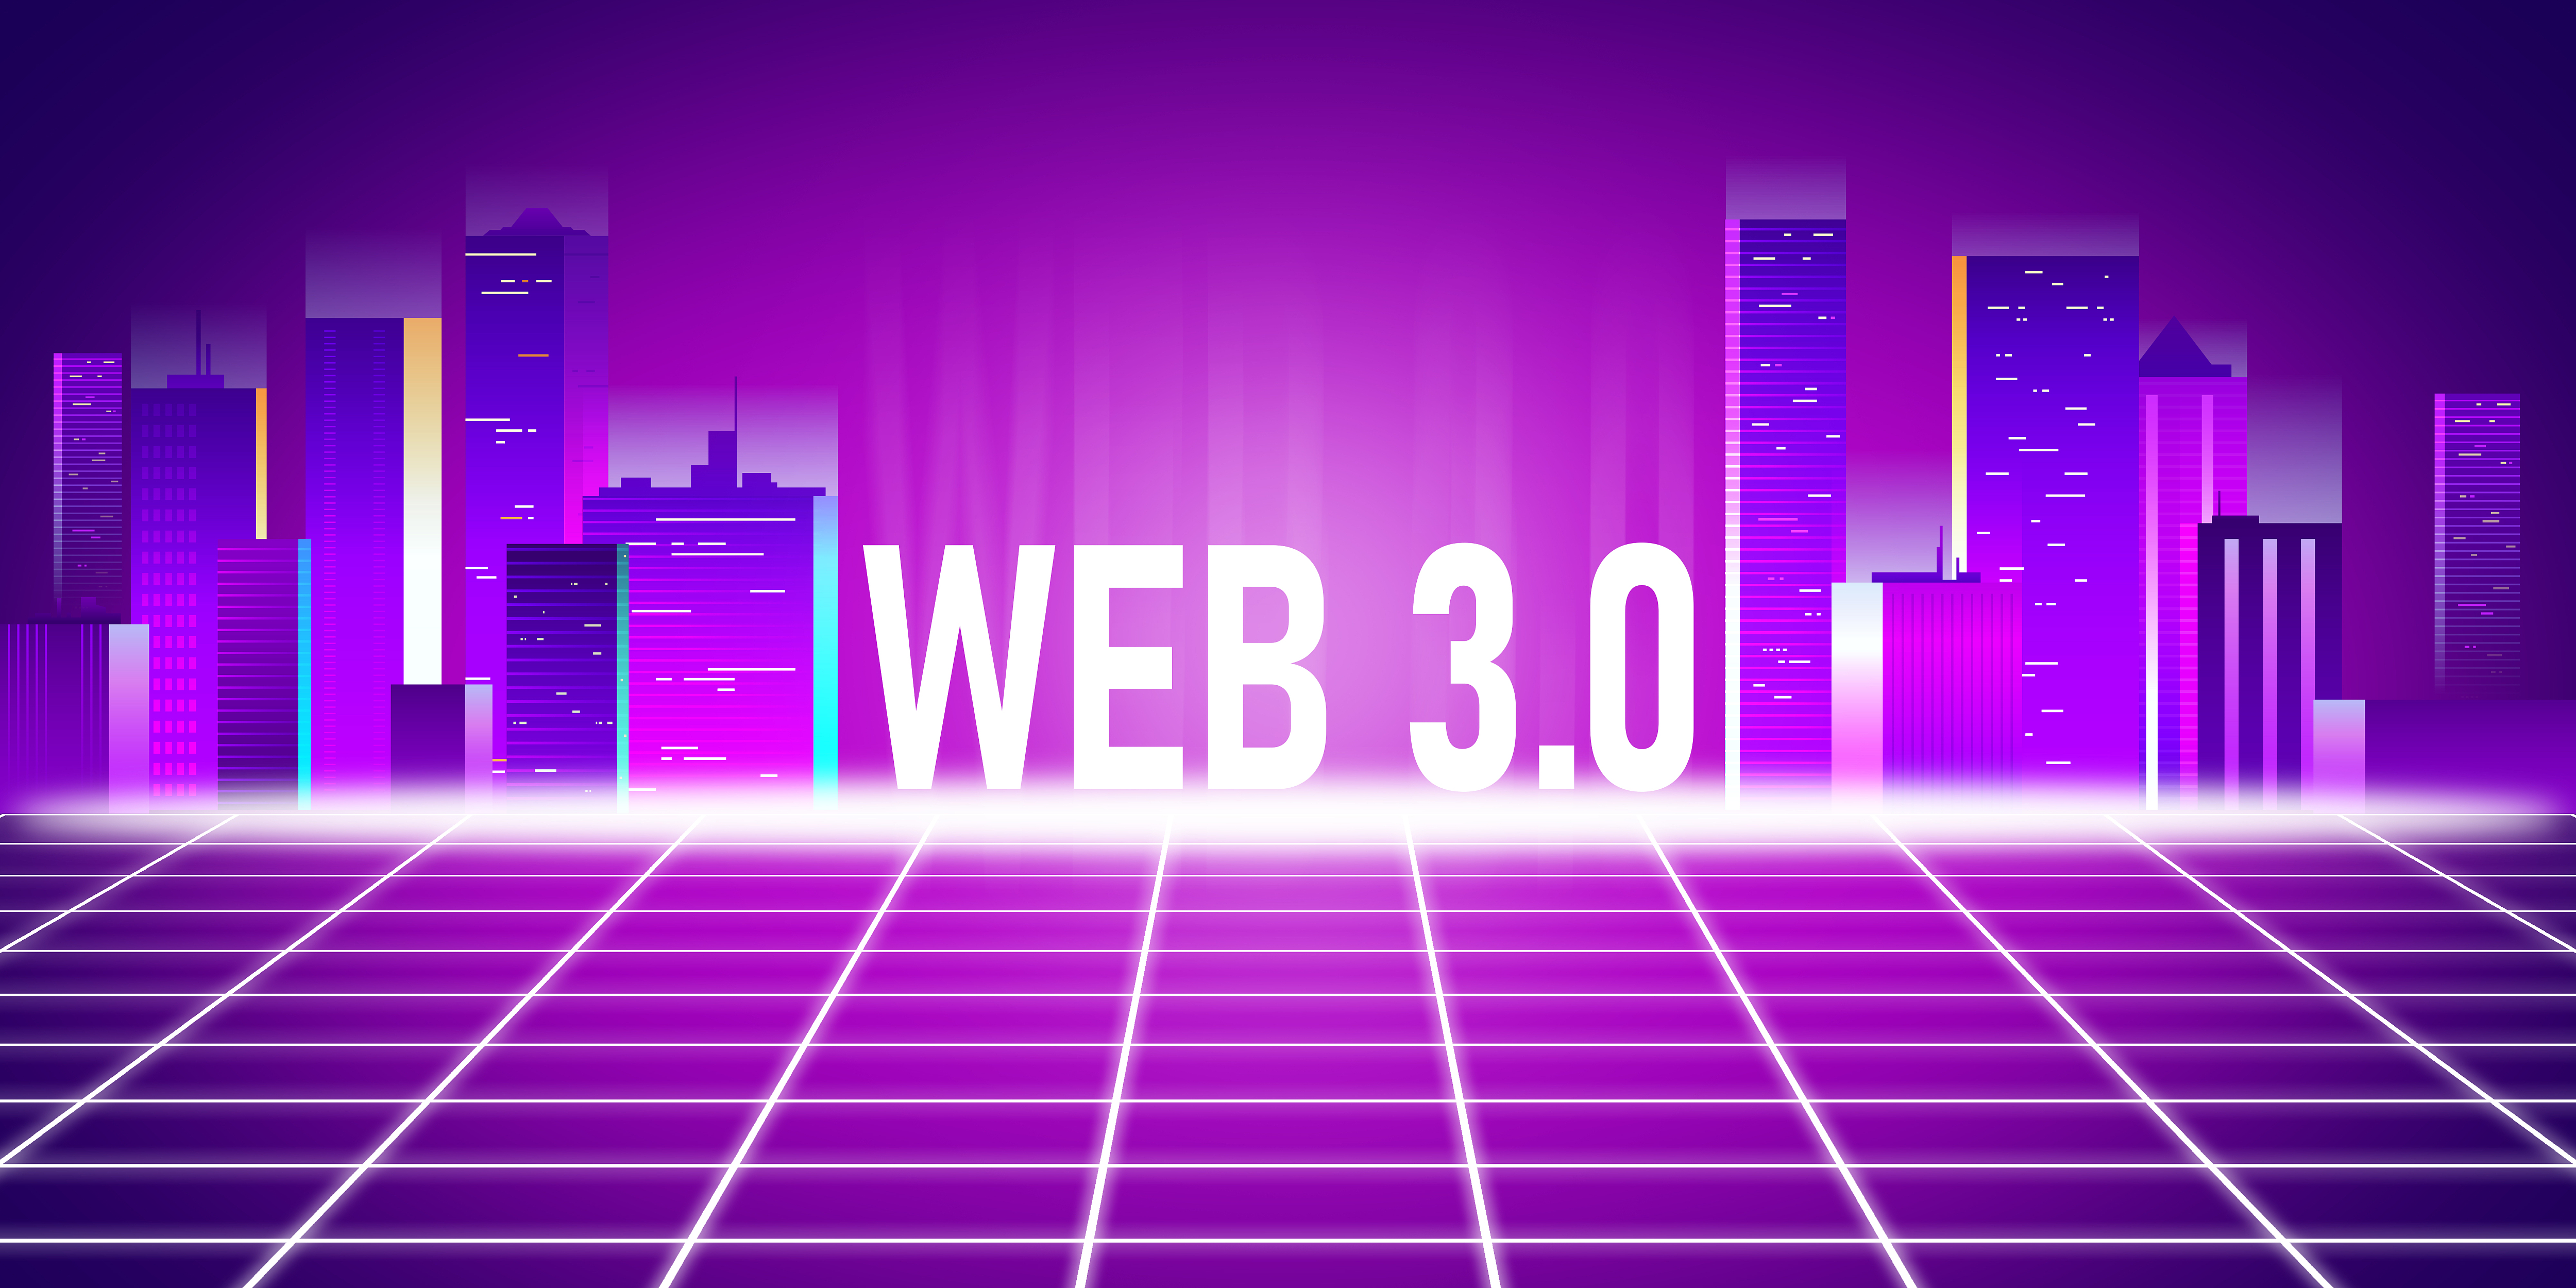 Web 3.0将改变社交媒体和在线内容的格局